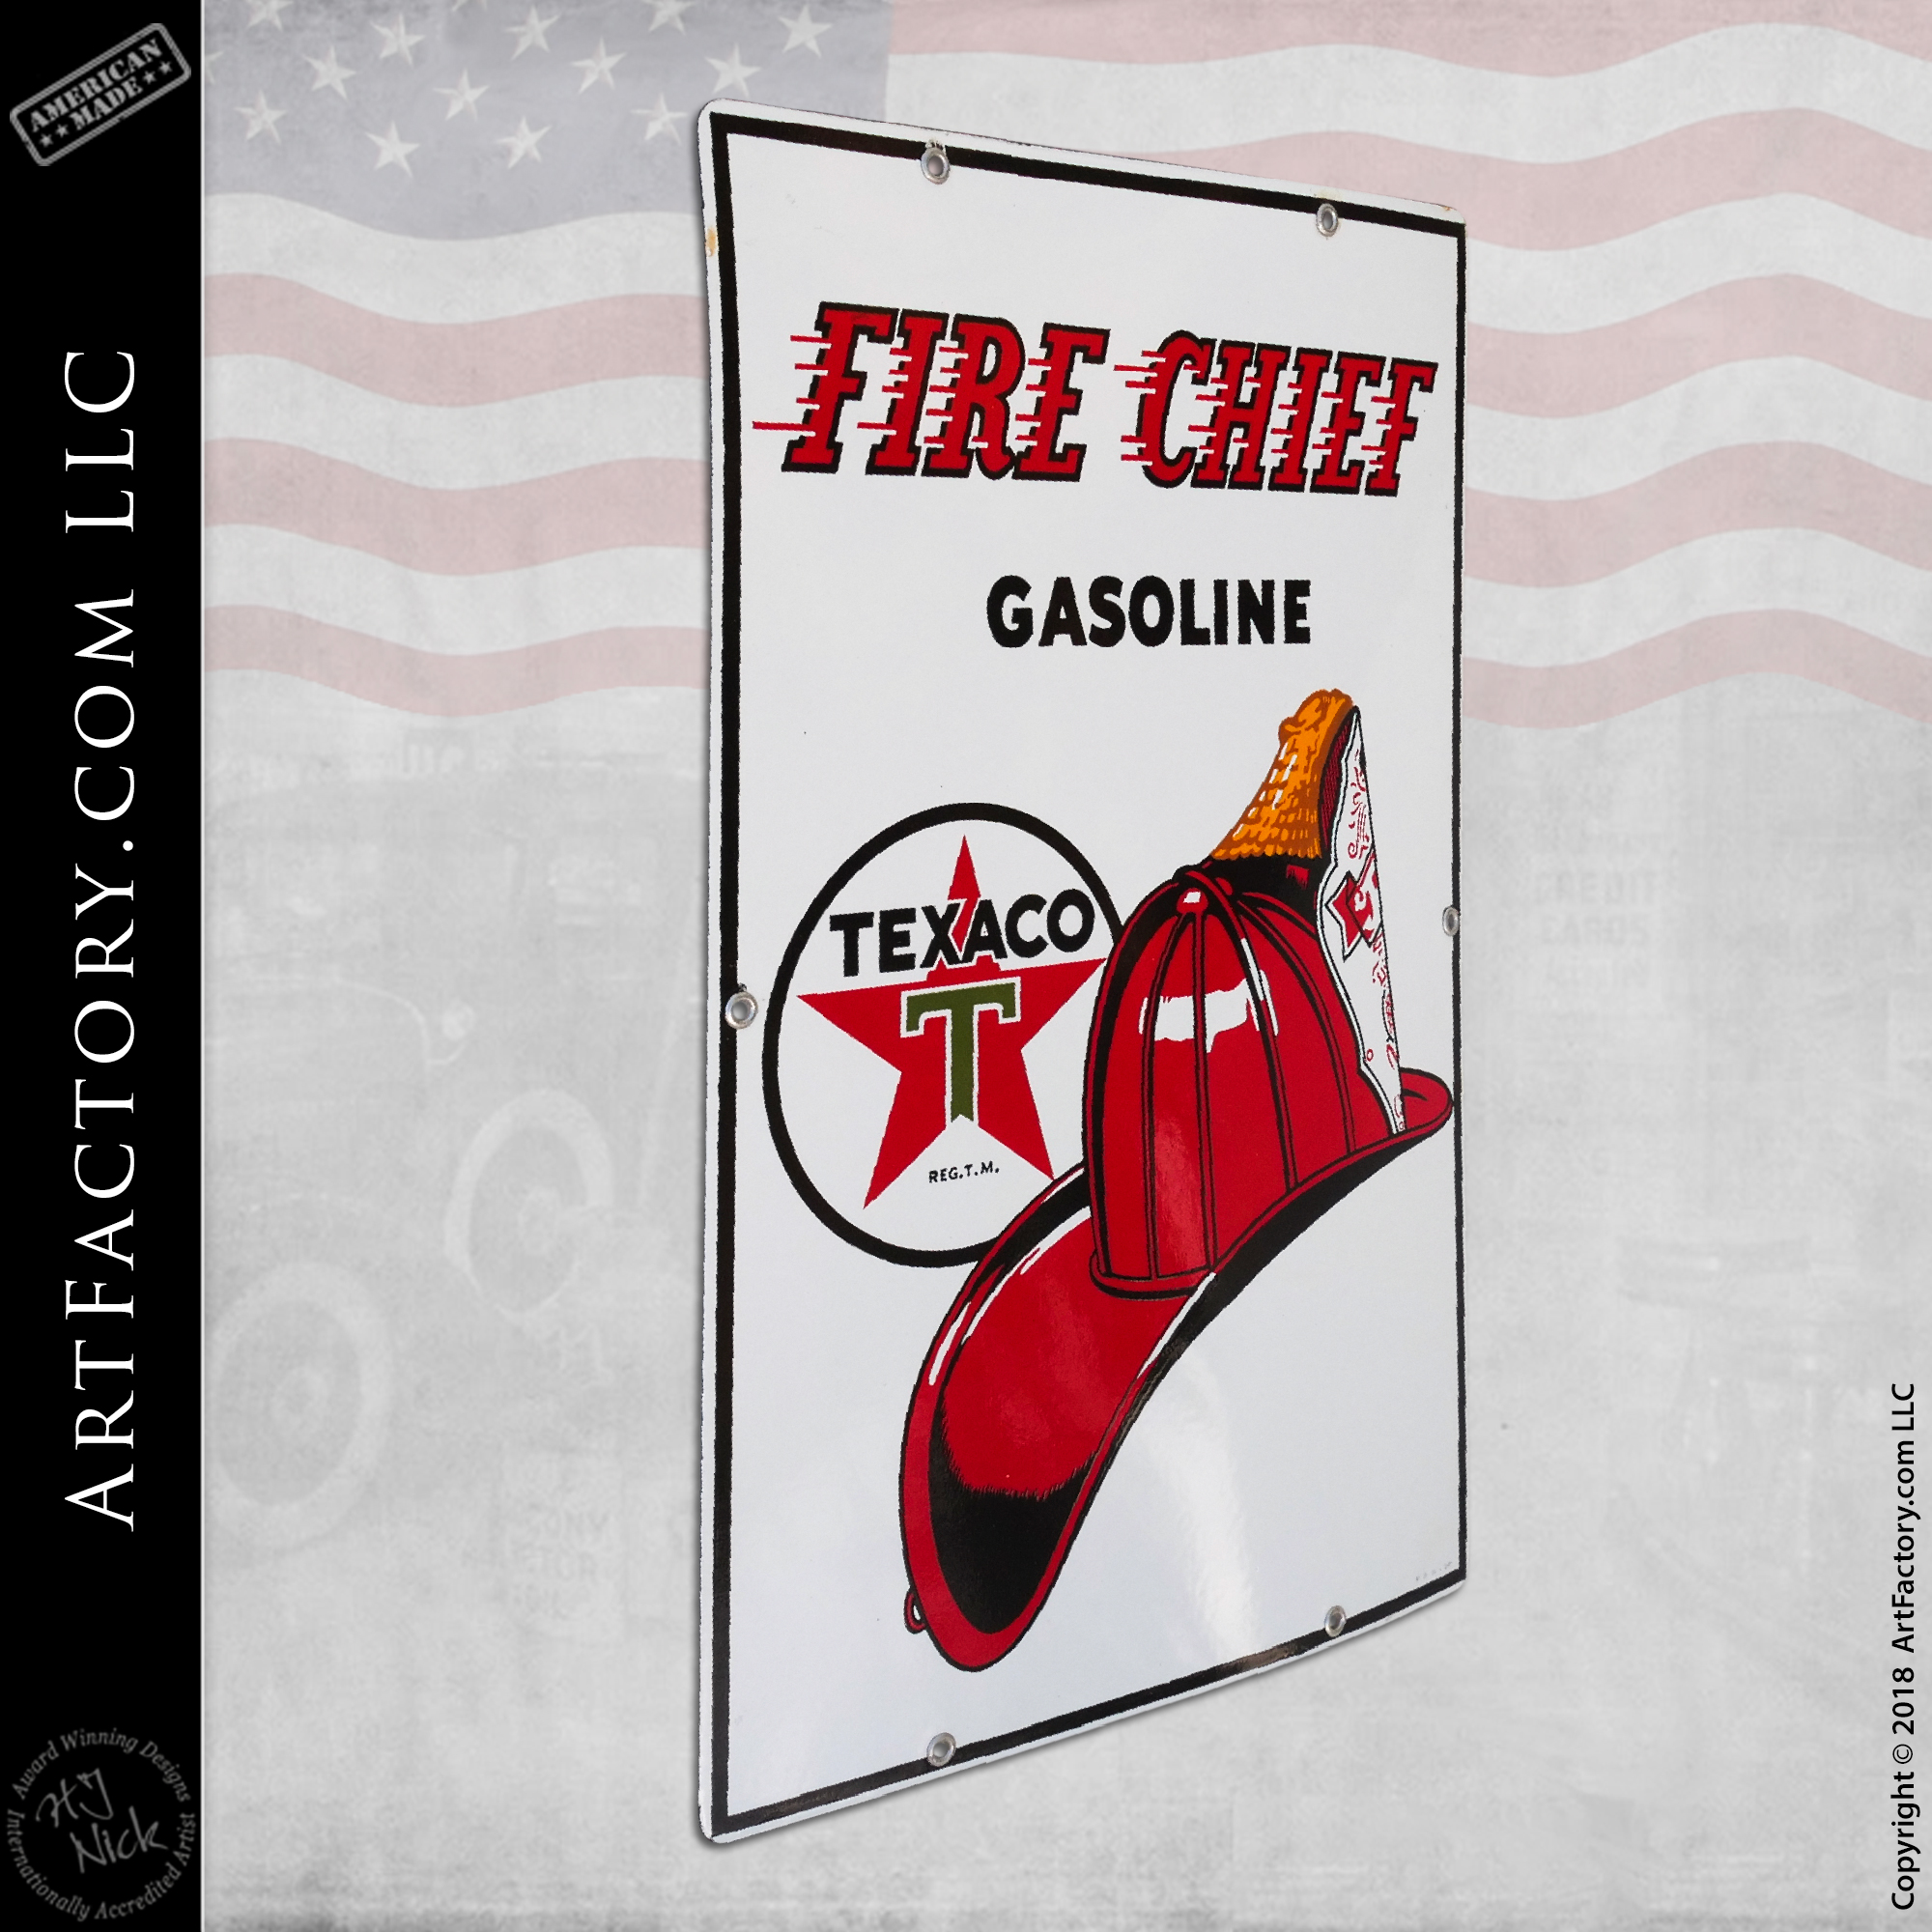 Vintage Fire Chief Gasoline Sign